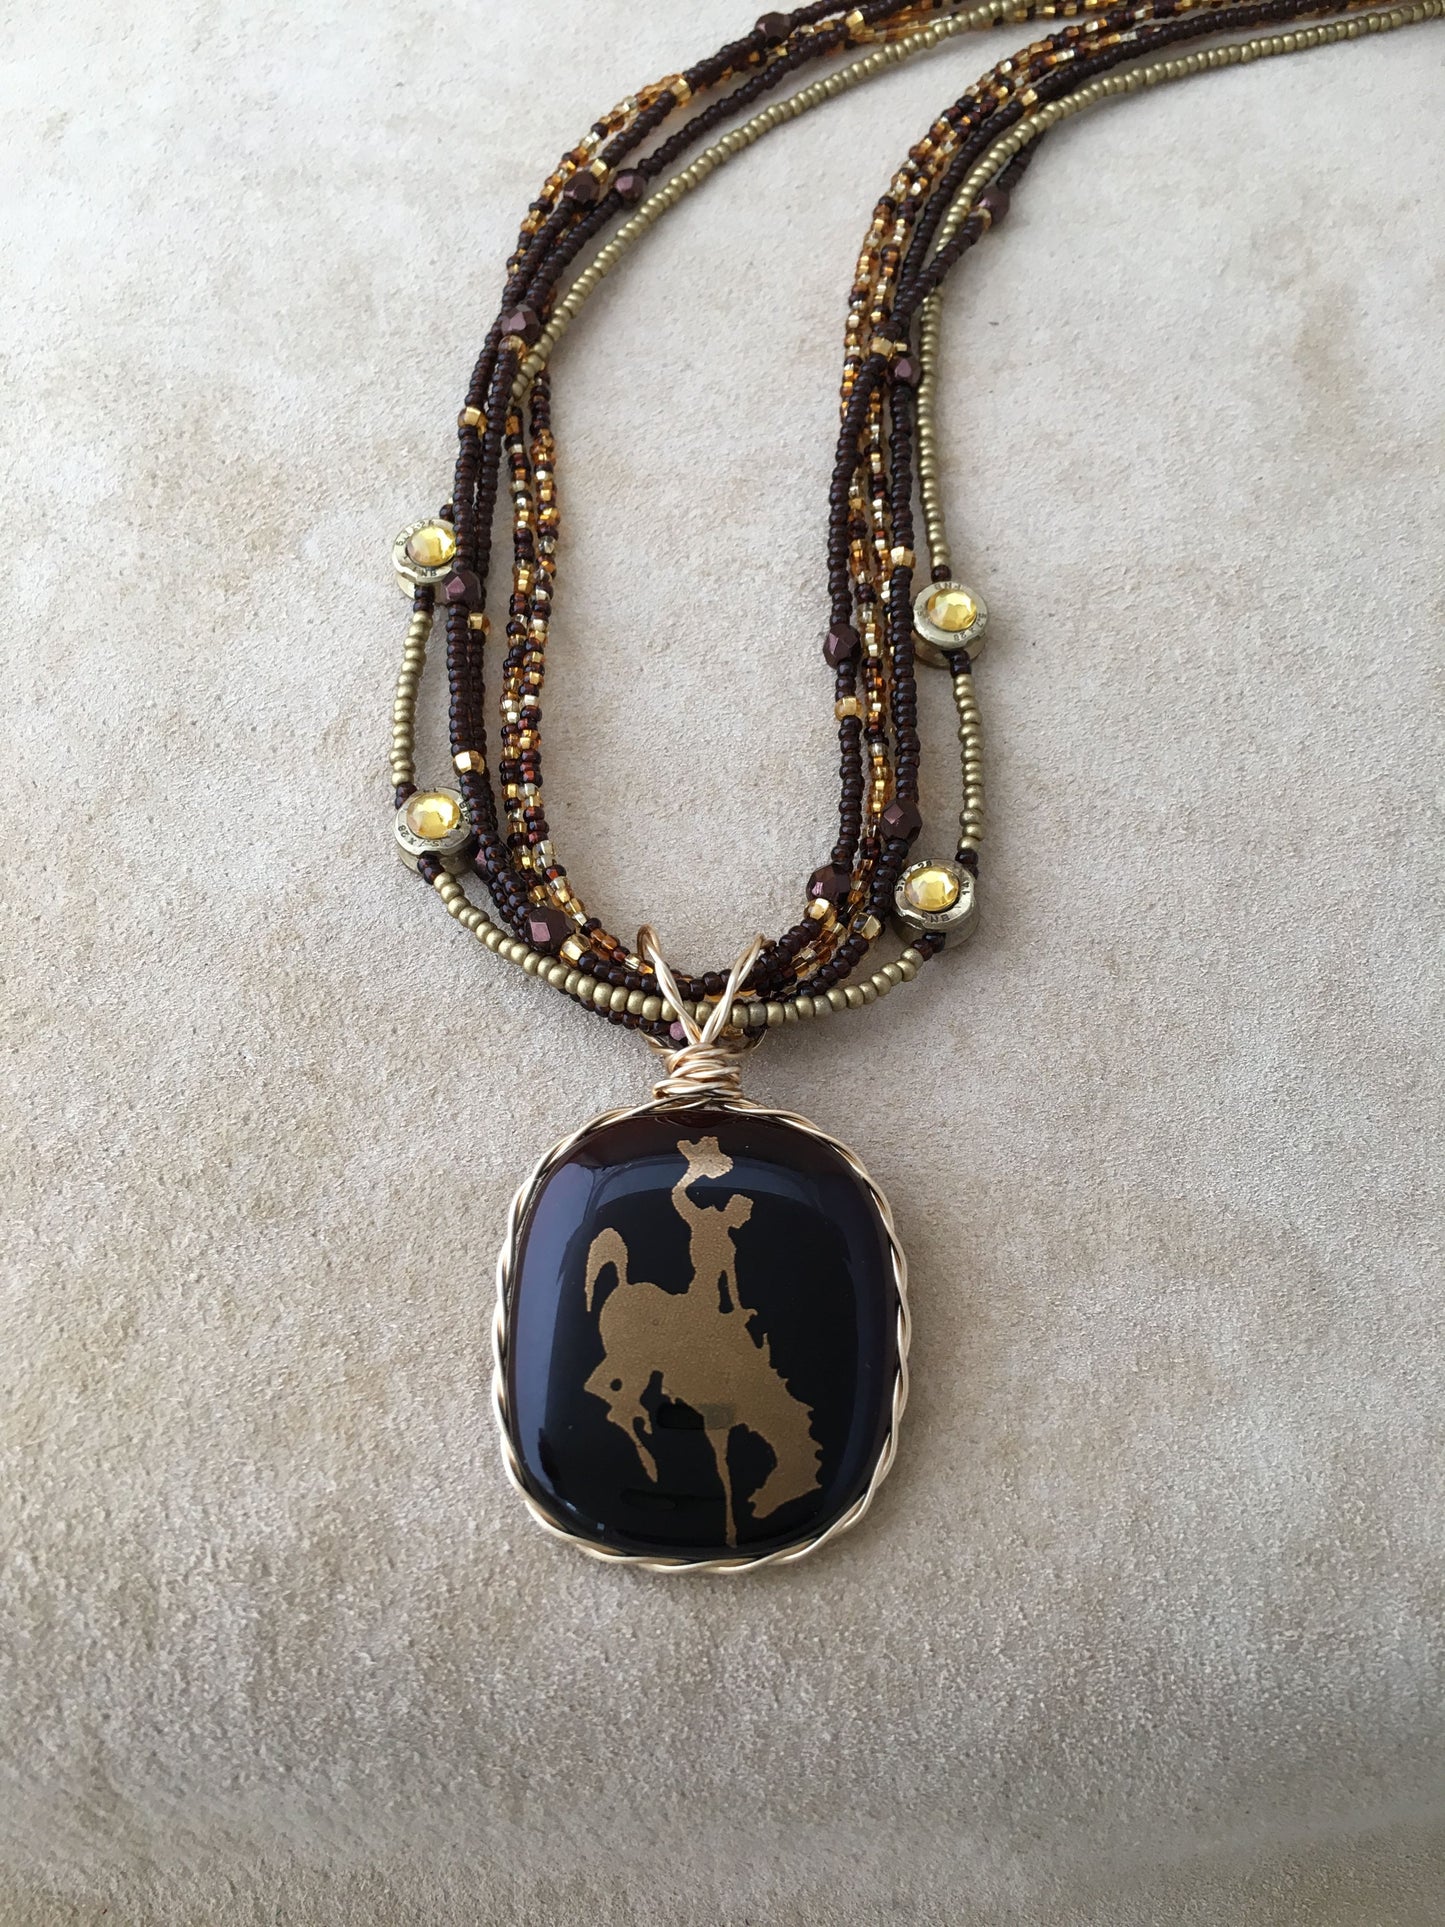 Cowboy Bucking Horse Annie Oakley Necklace